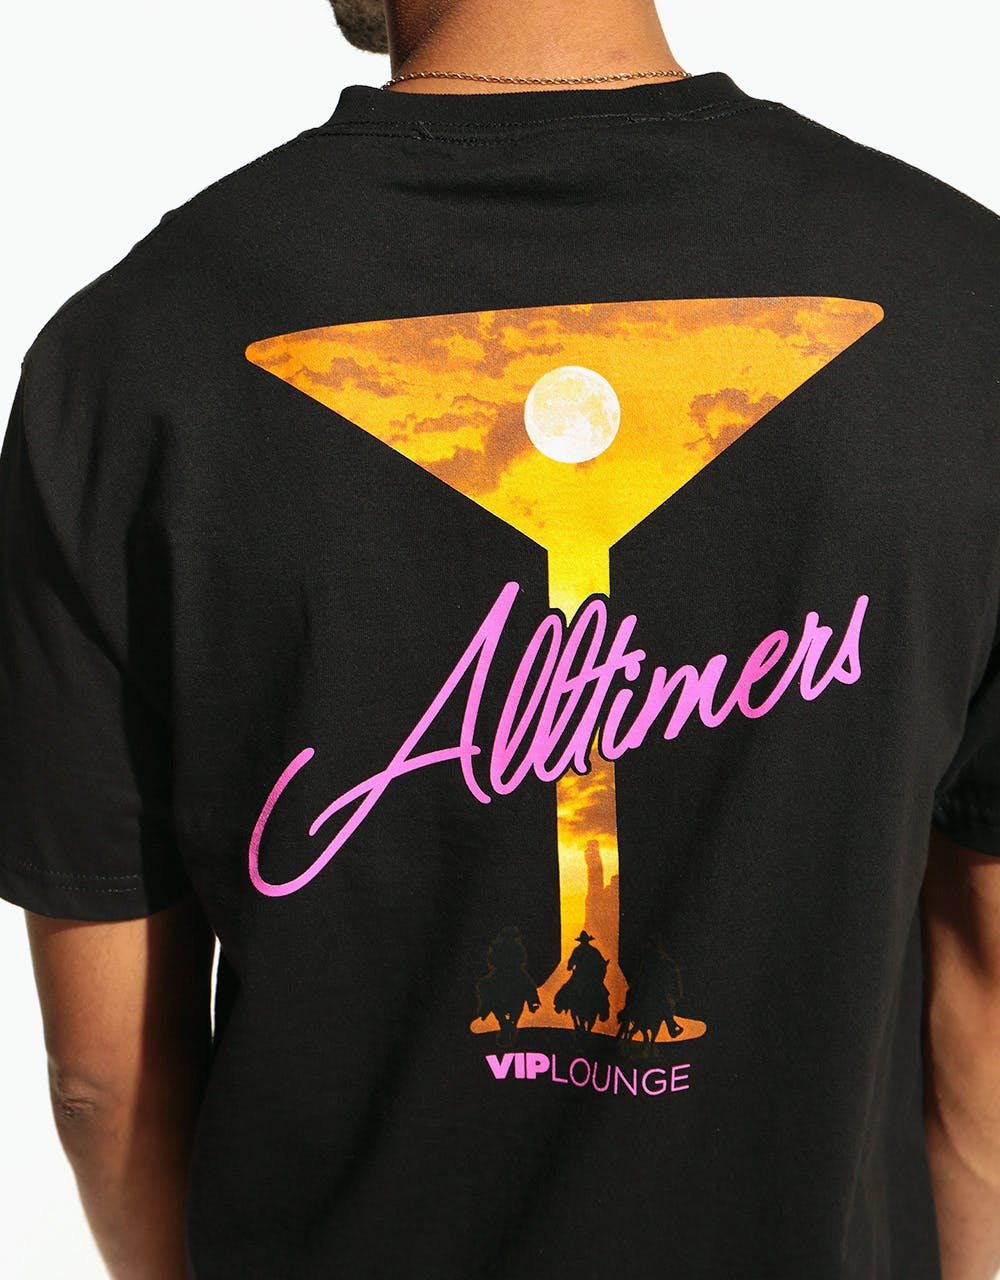 Alltimers 3 Amigos T-Shirt - Black